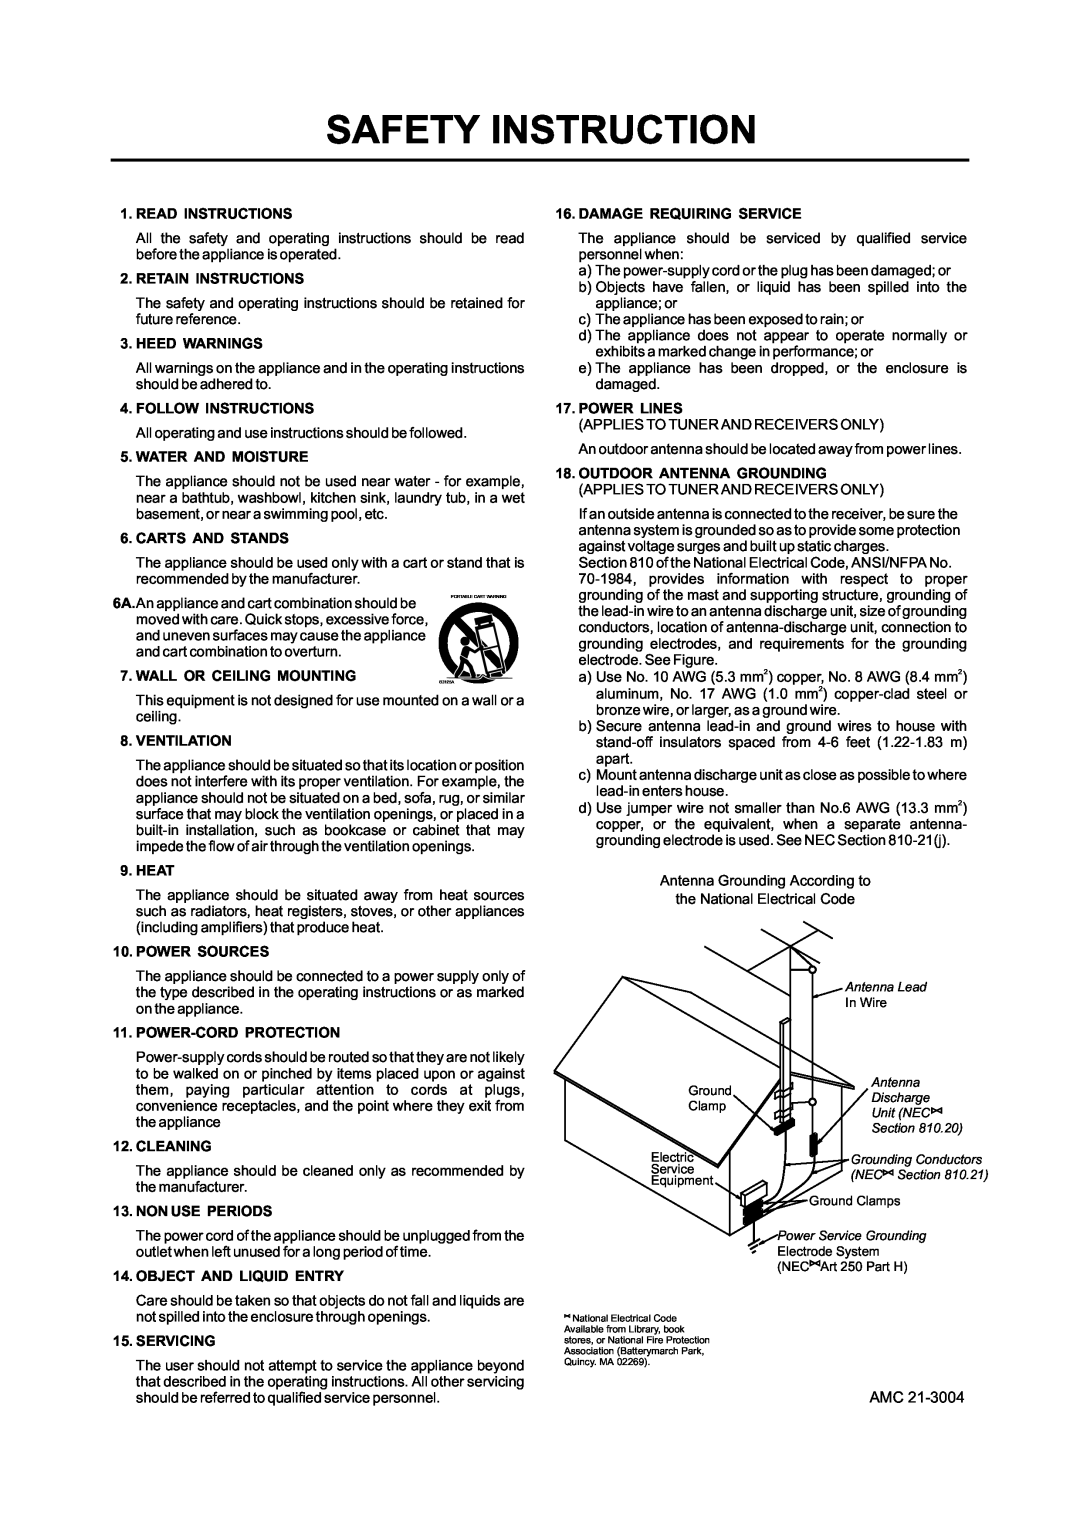 AMC CD8b manual Read Instructions 